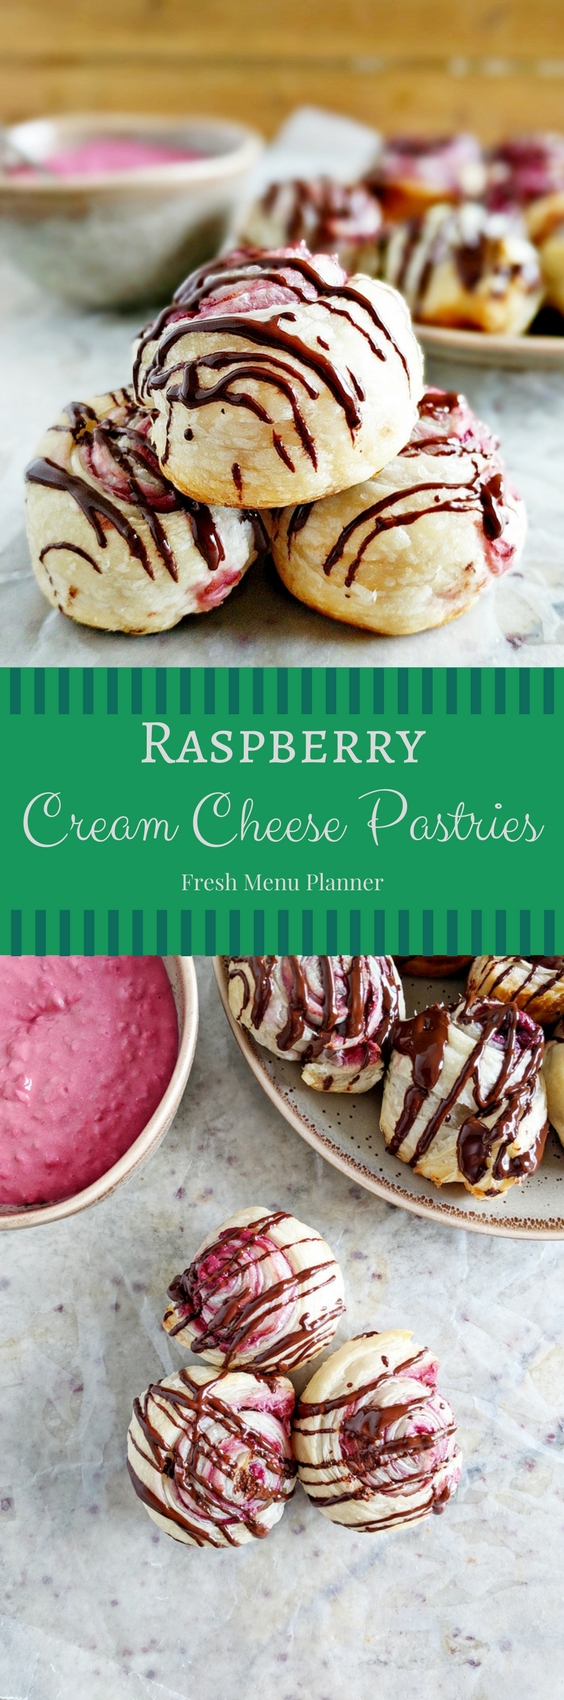 Raspberry Cream Cheese Pastries